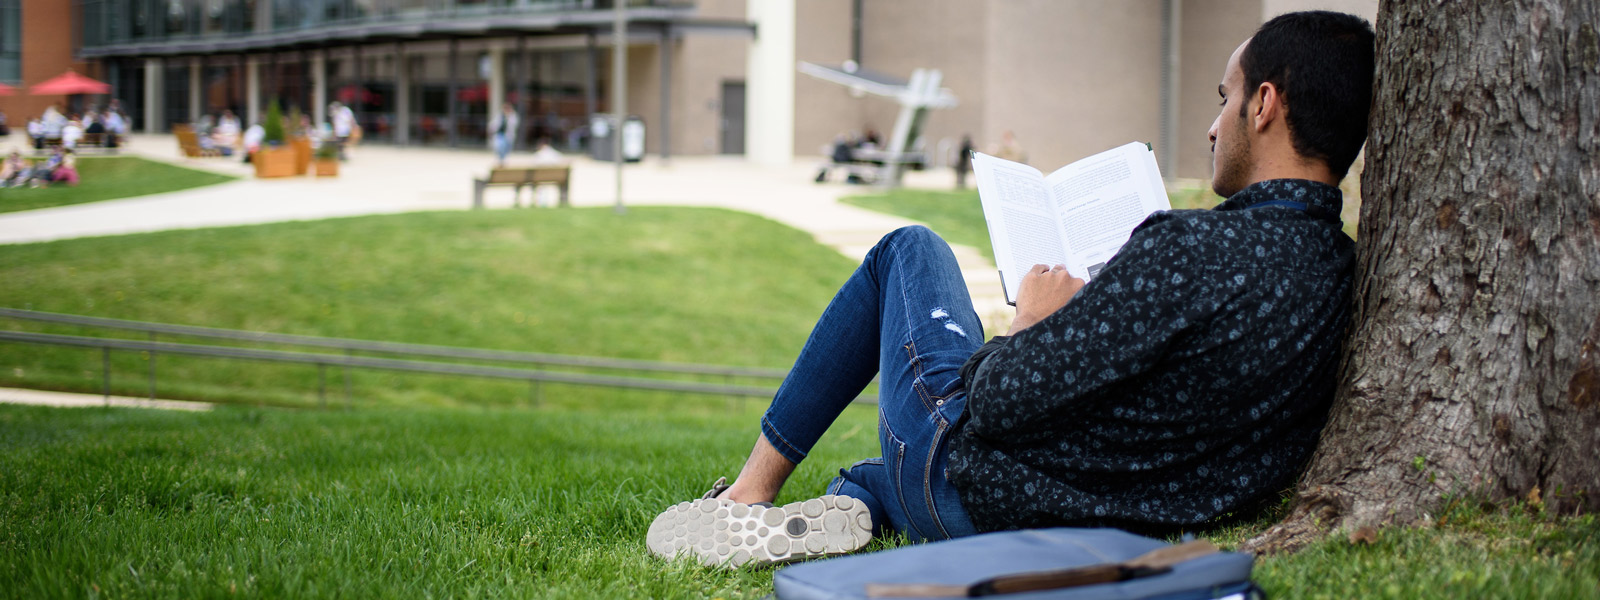 Man reading on university lawn